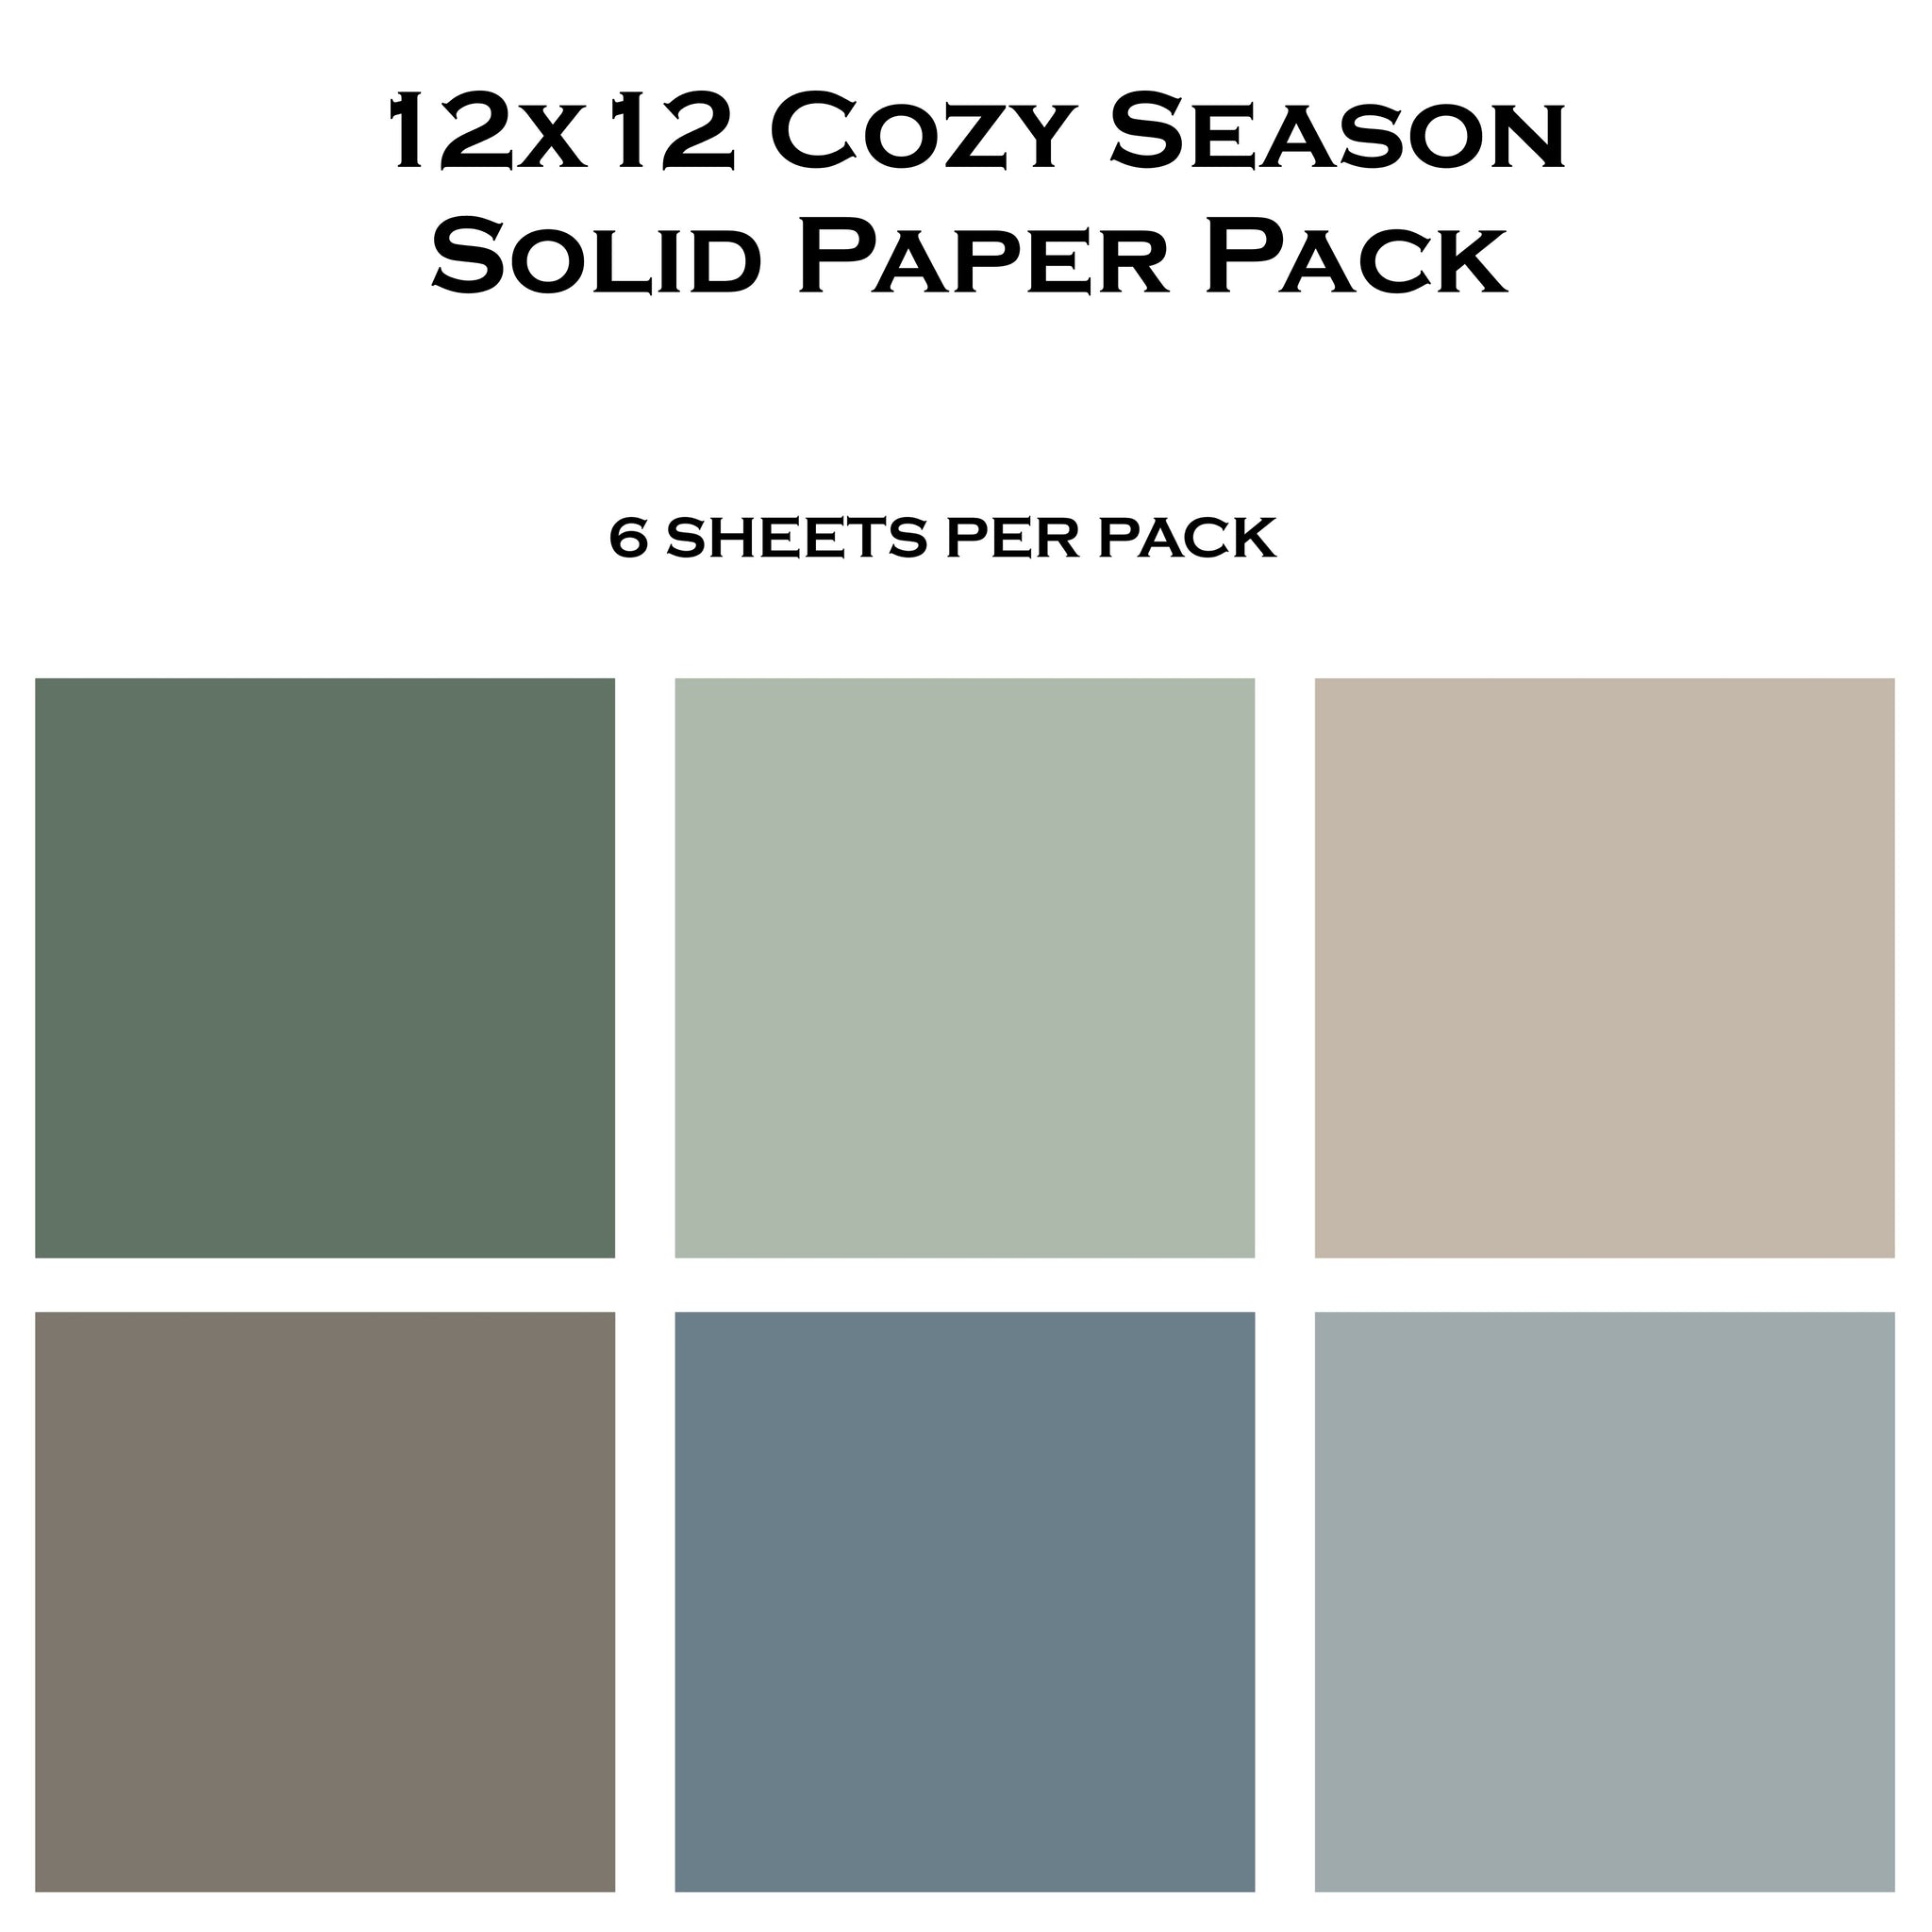 November "Cozy Season" Solid Paper Pack